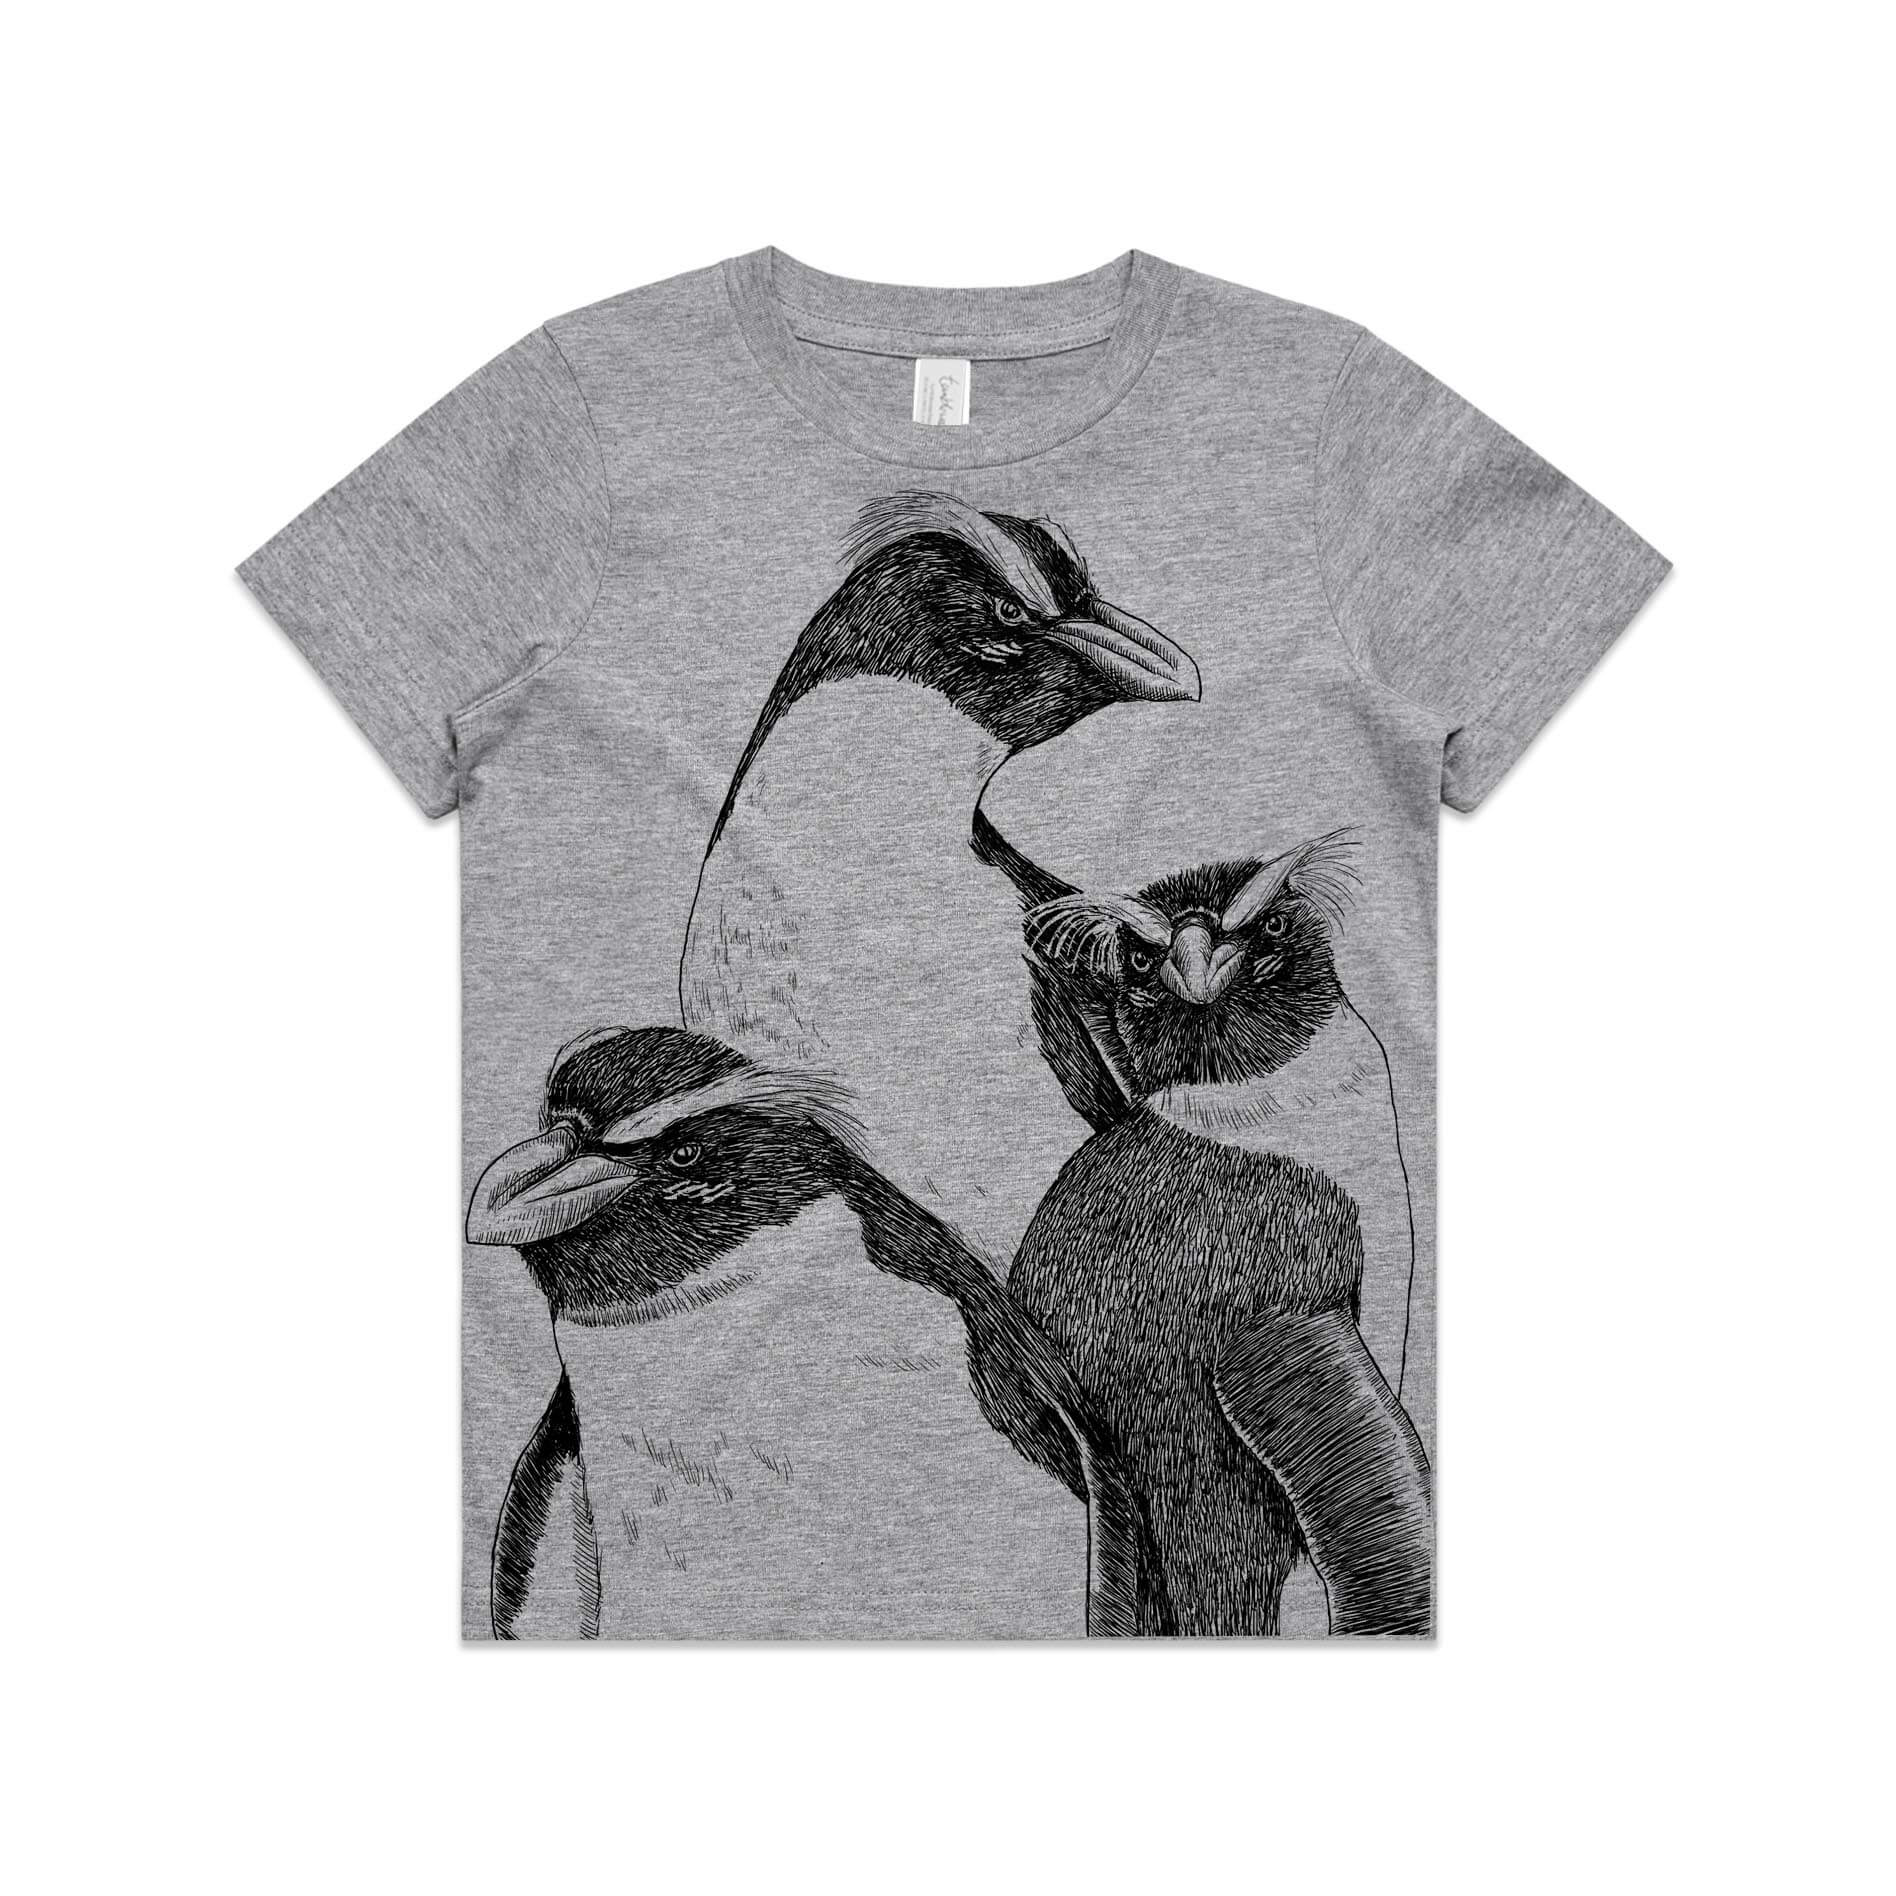 Grey marle, cotton kids' t-shirt with screen printed Kids tawaki/fiordland crested penguin design.